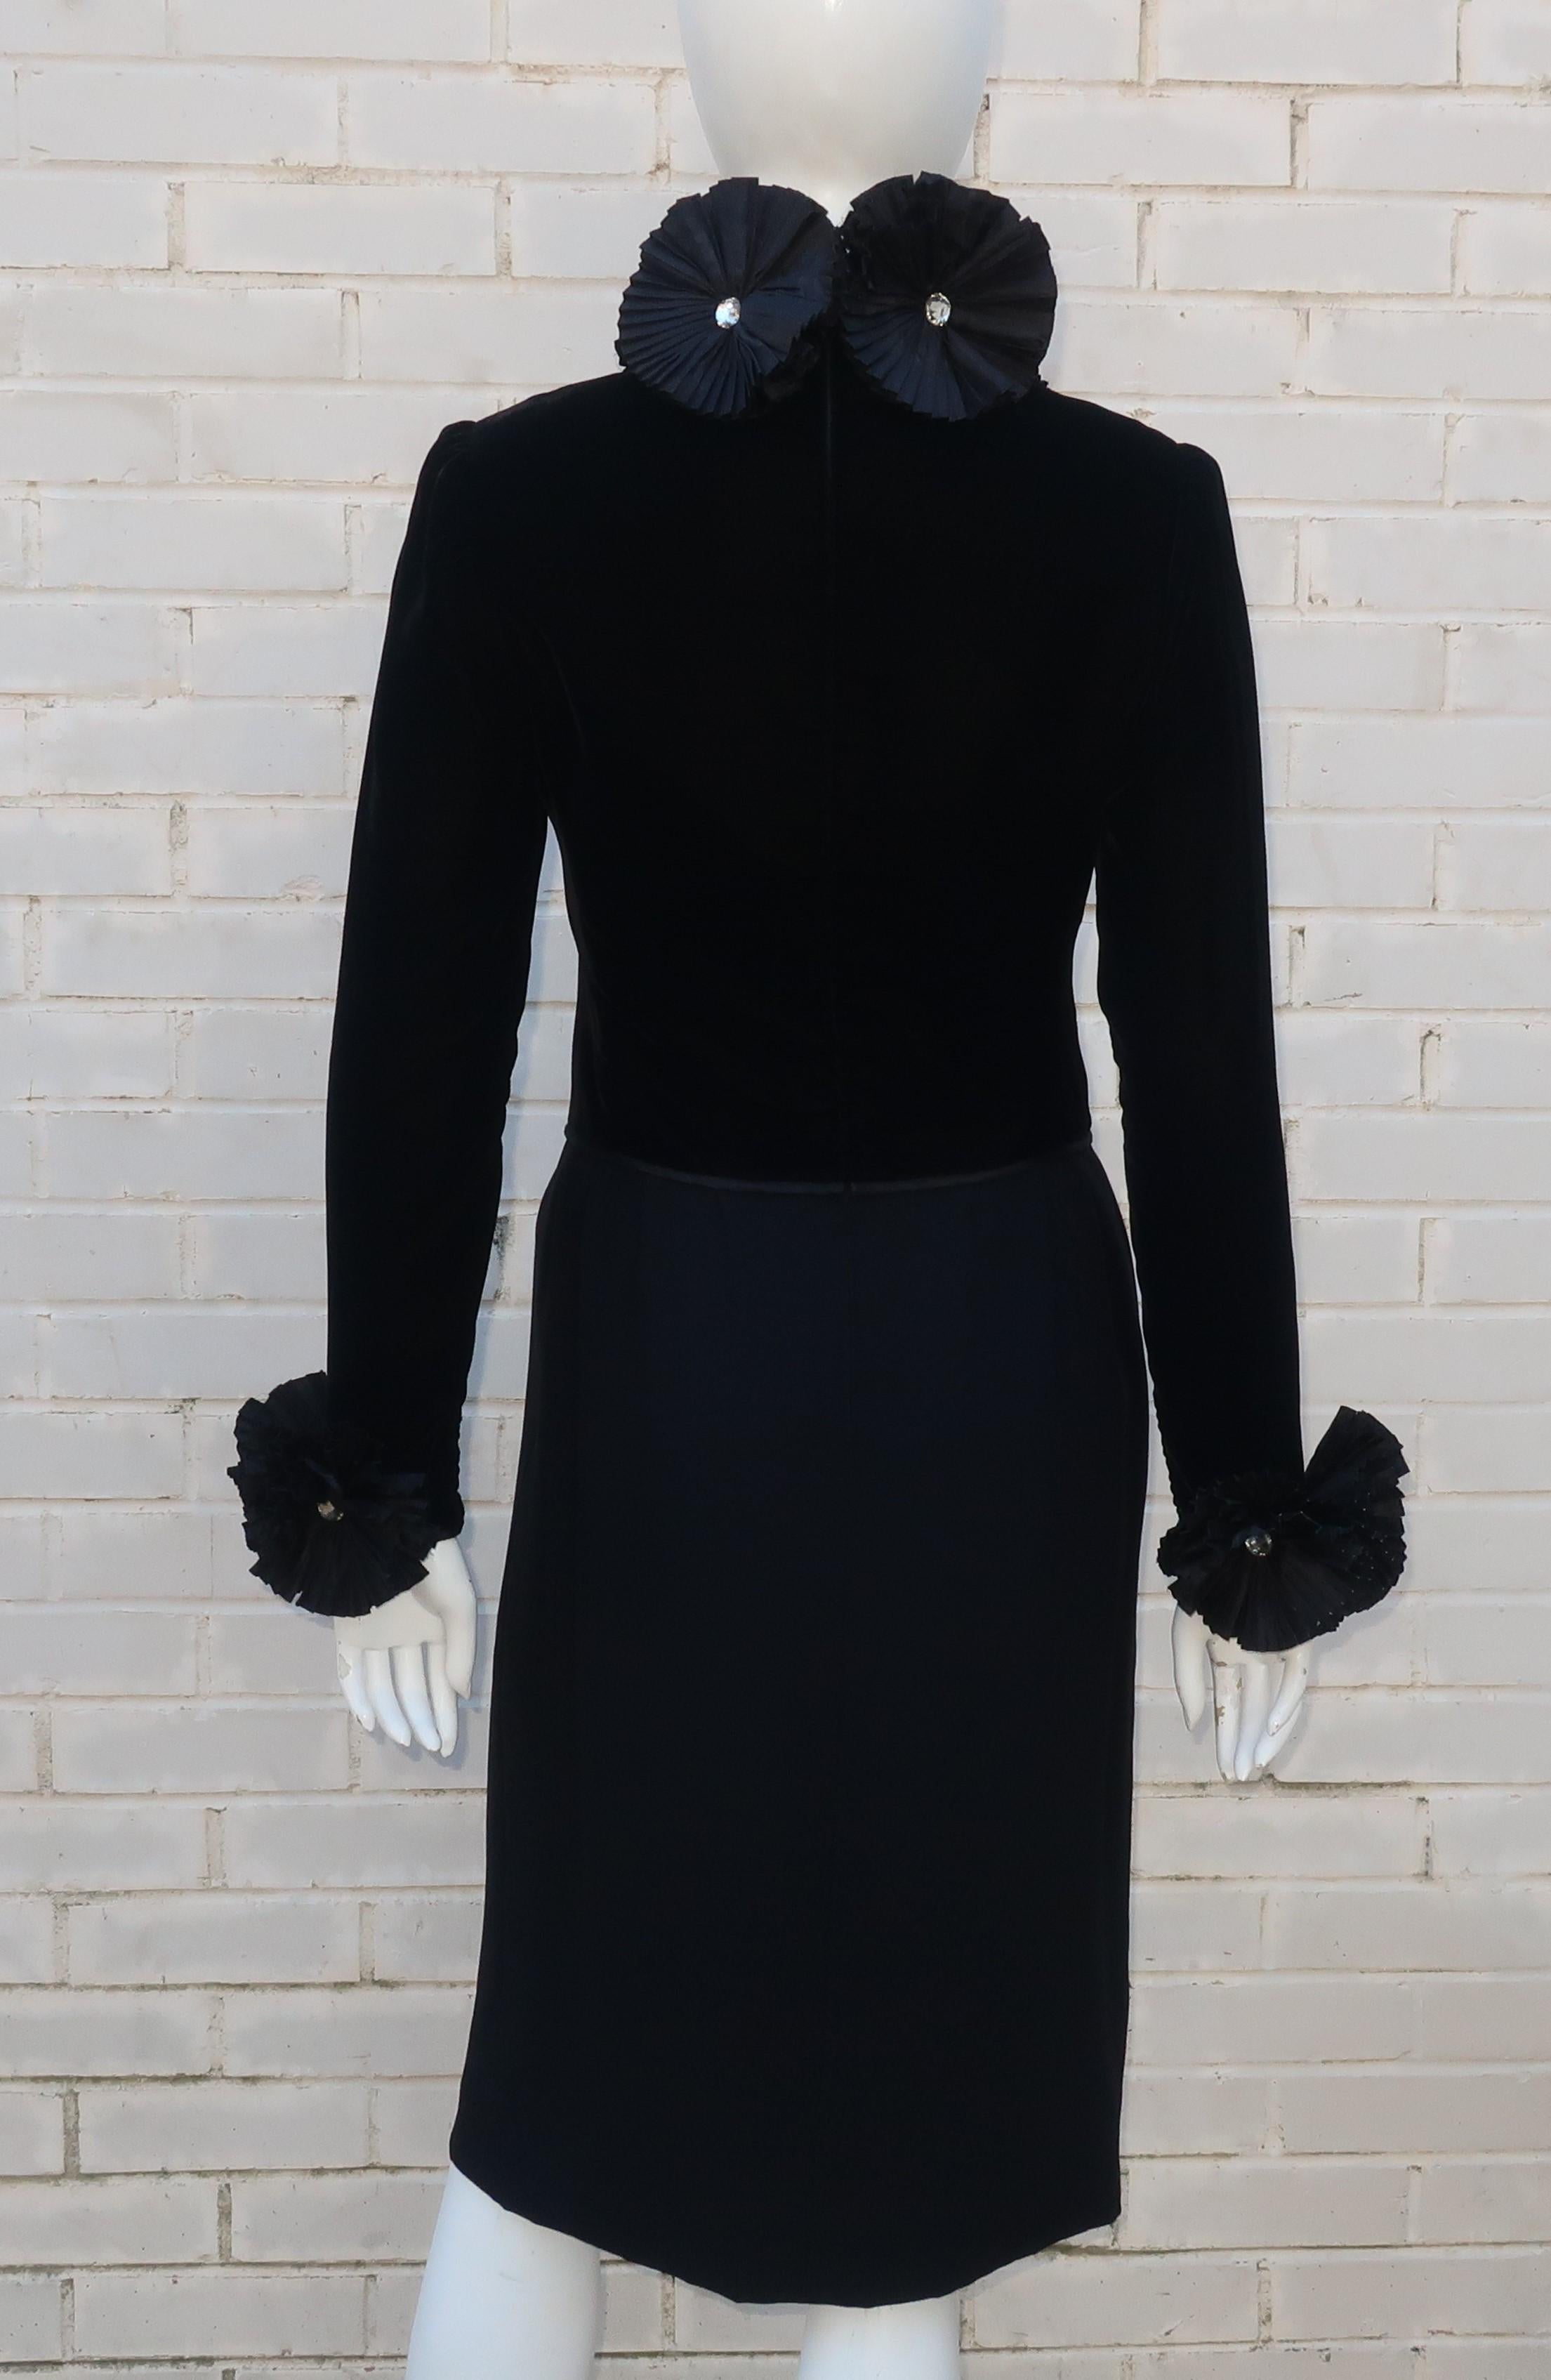 Nina Ricci Black Velvet Dress With Ruff Style Collar 5